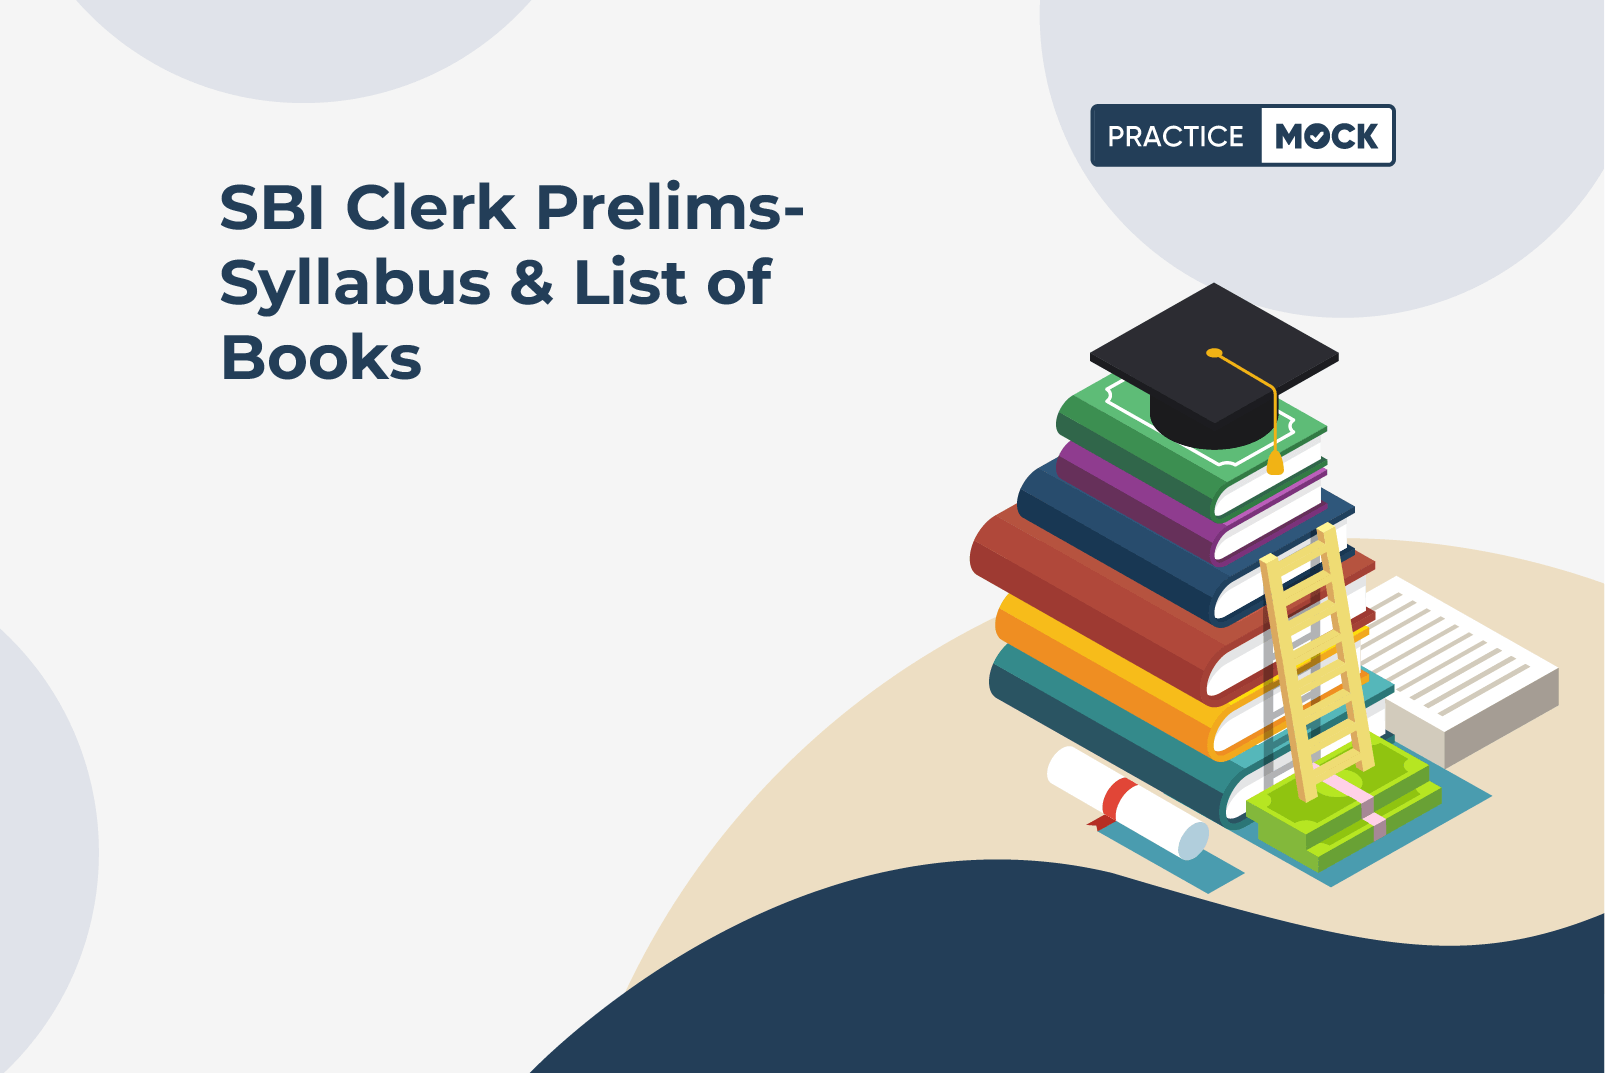 SBI Clerk Prelims- Syllabus & List of Books (1)